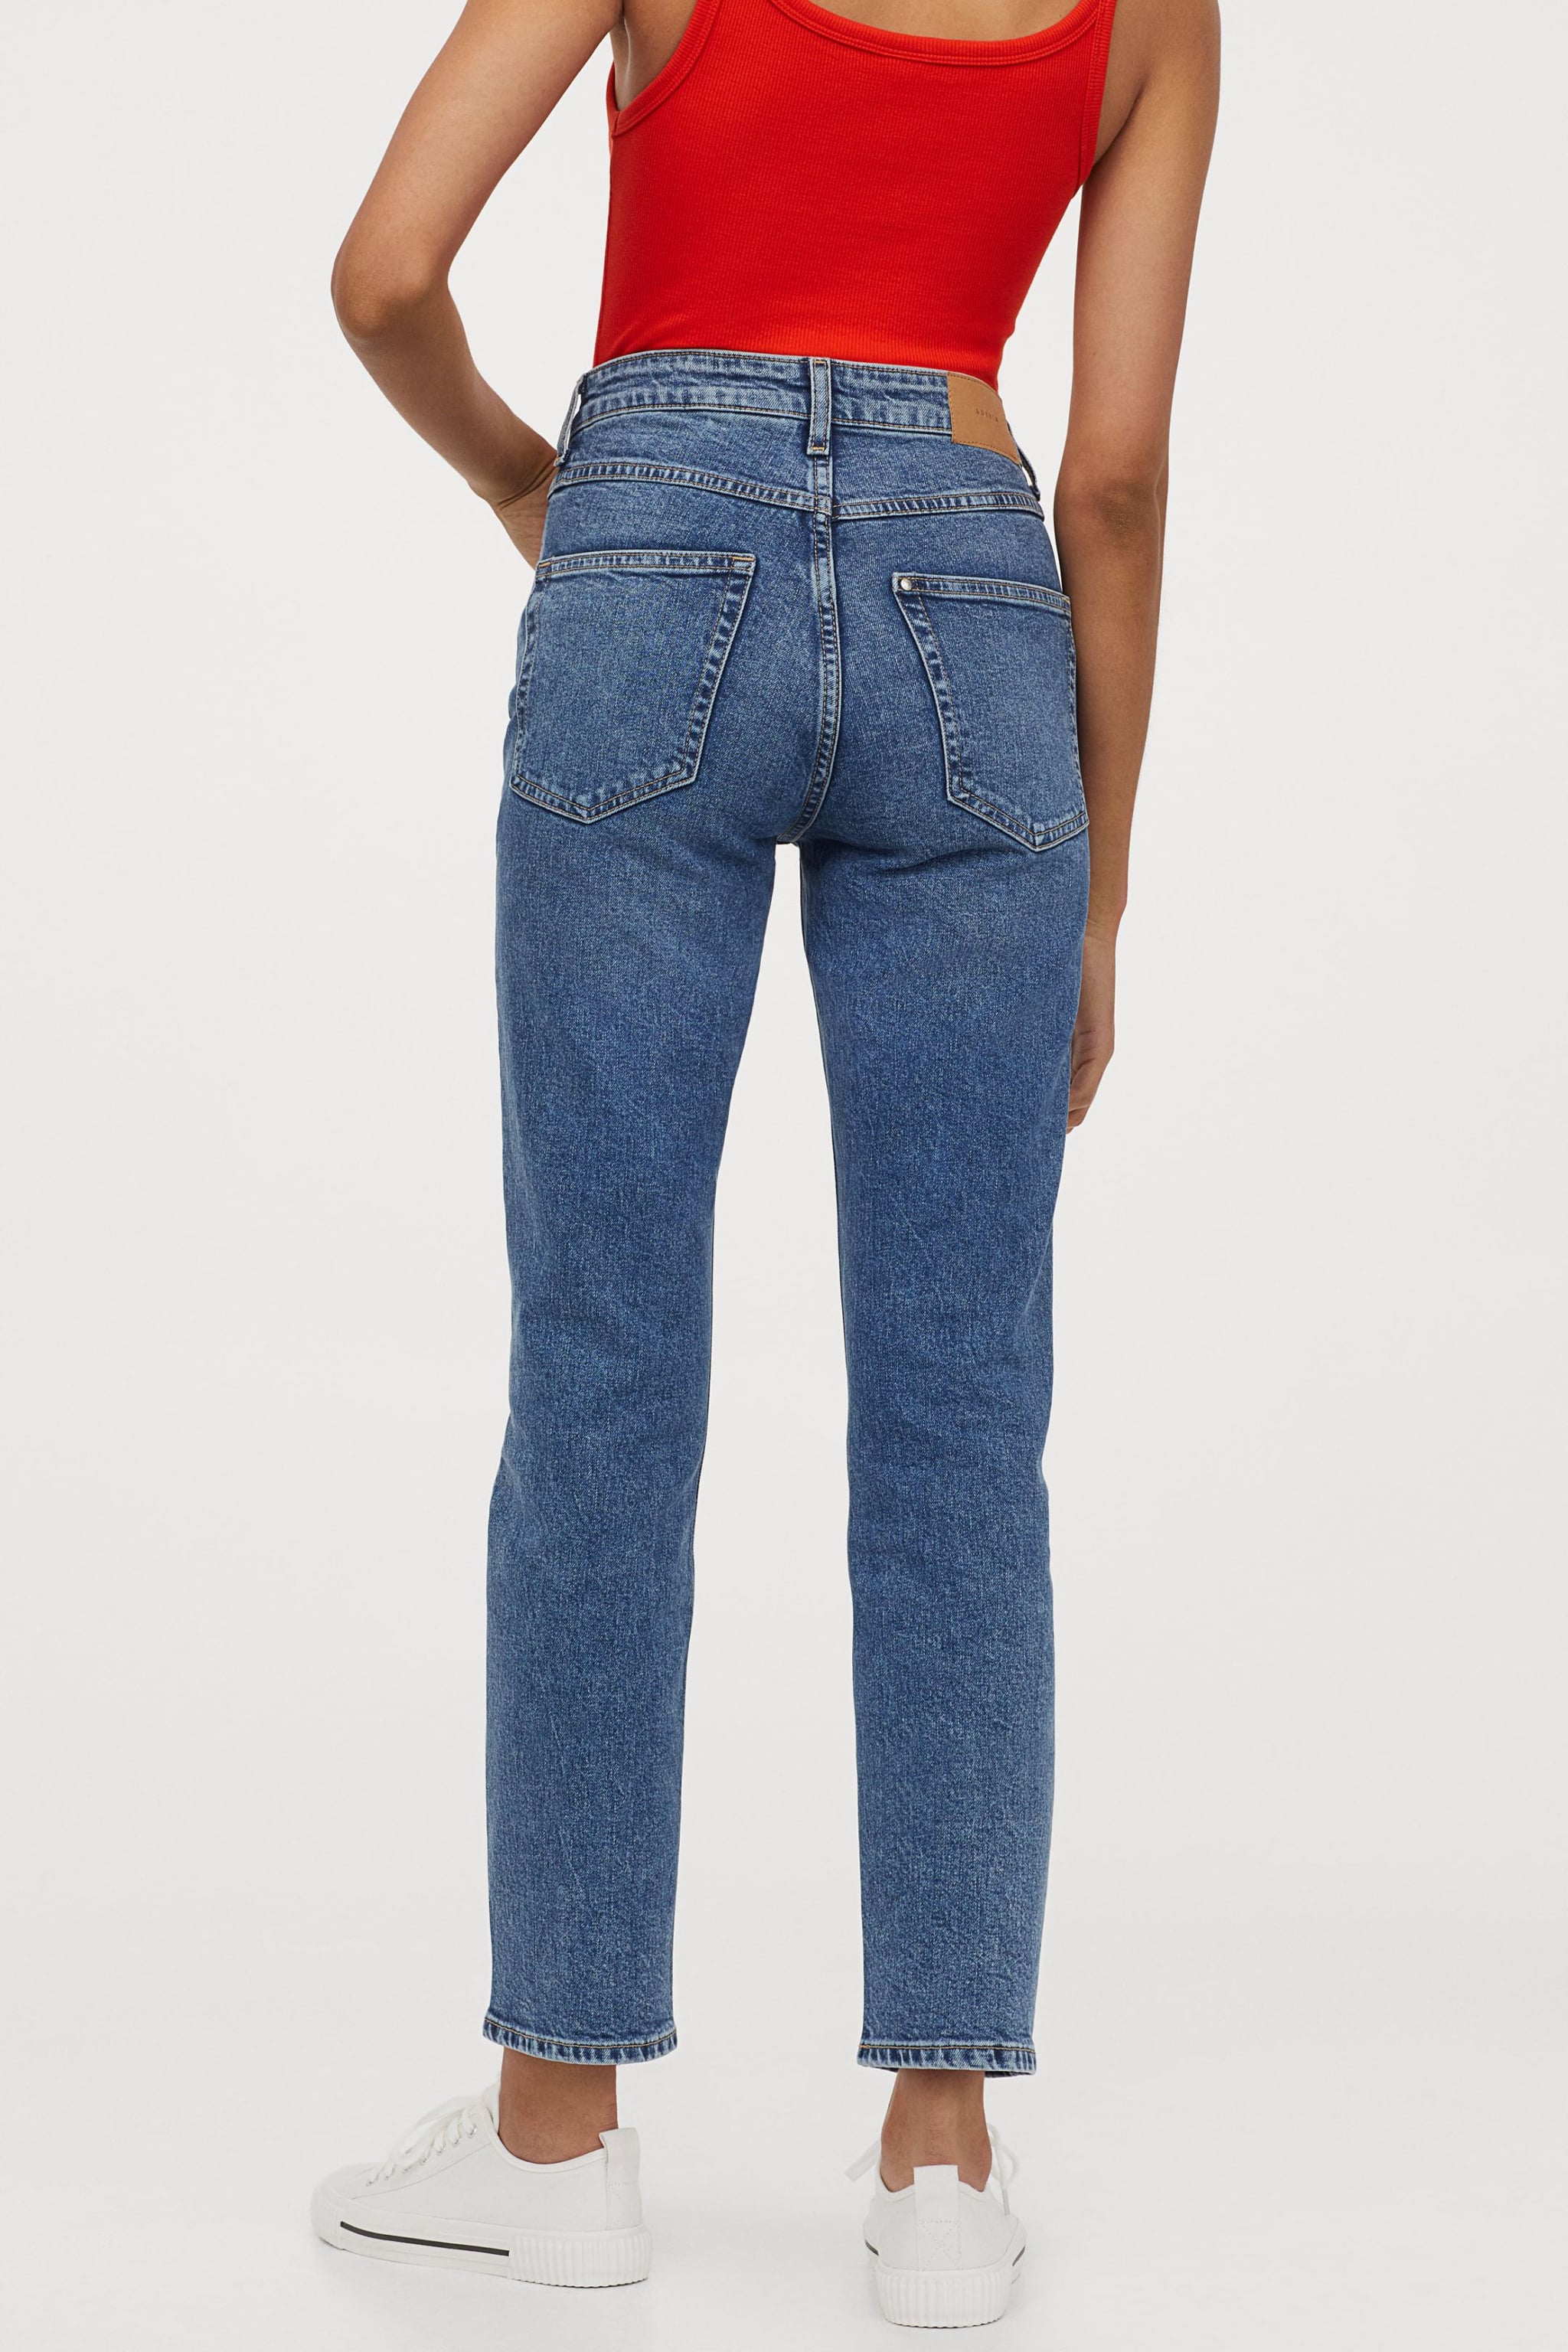 h&m girls skinny jeans